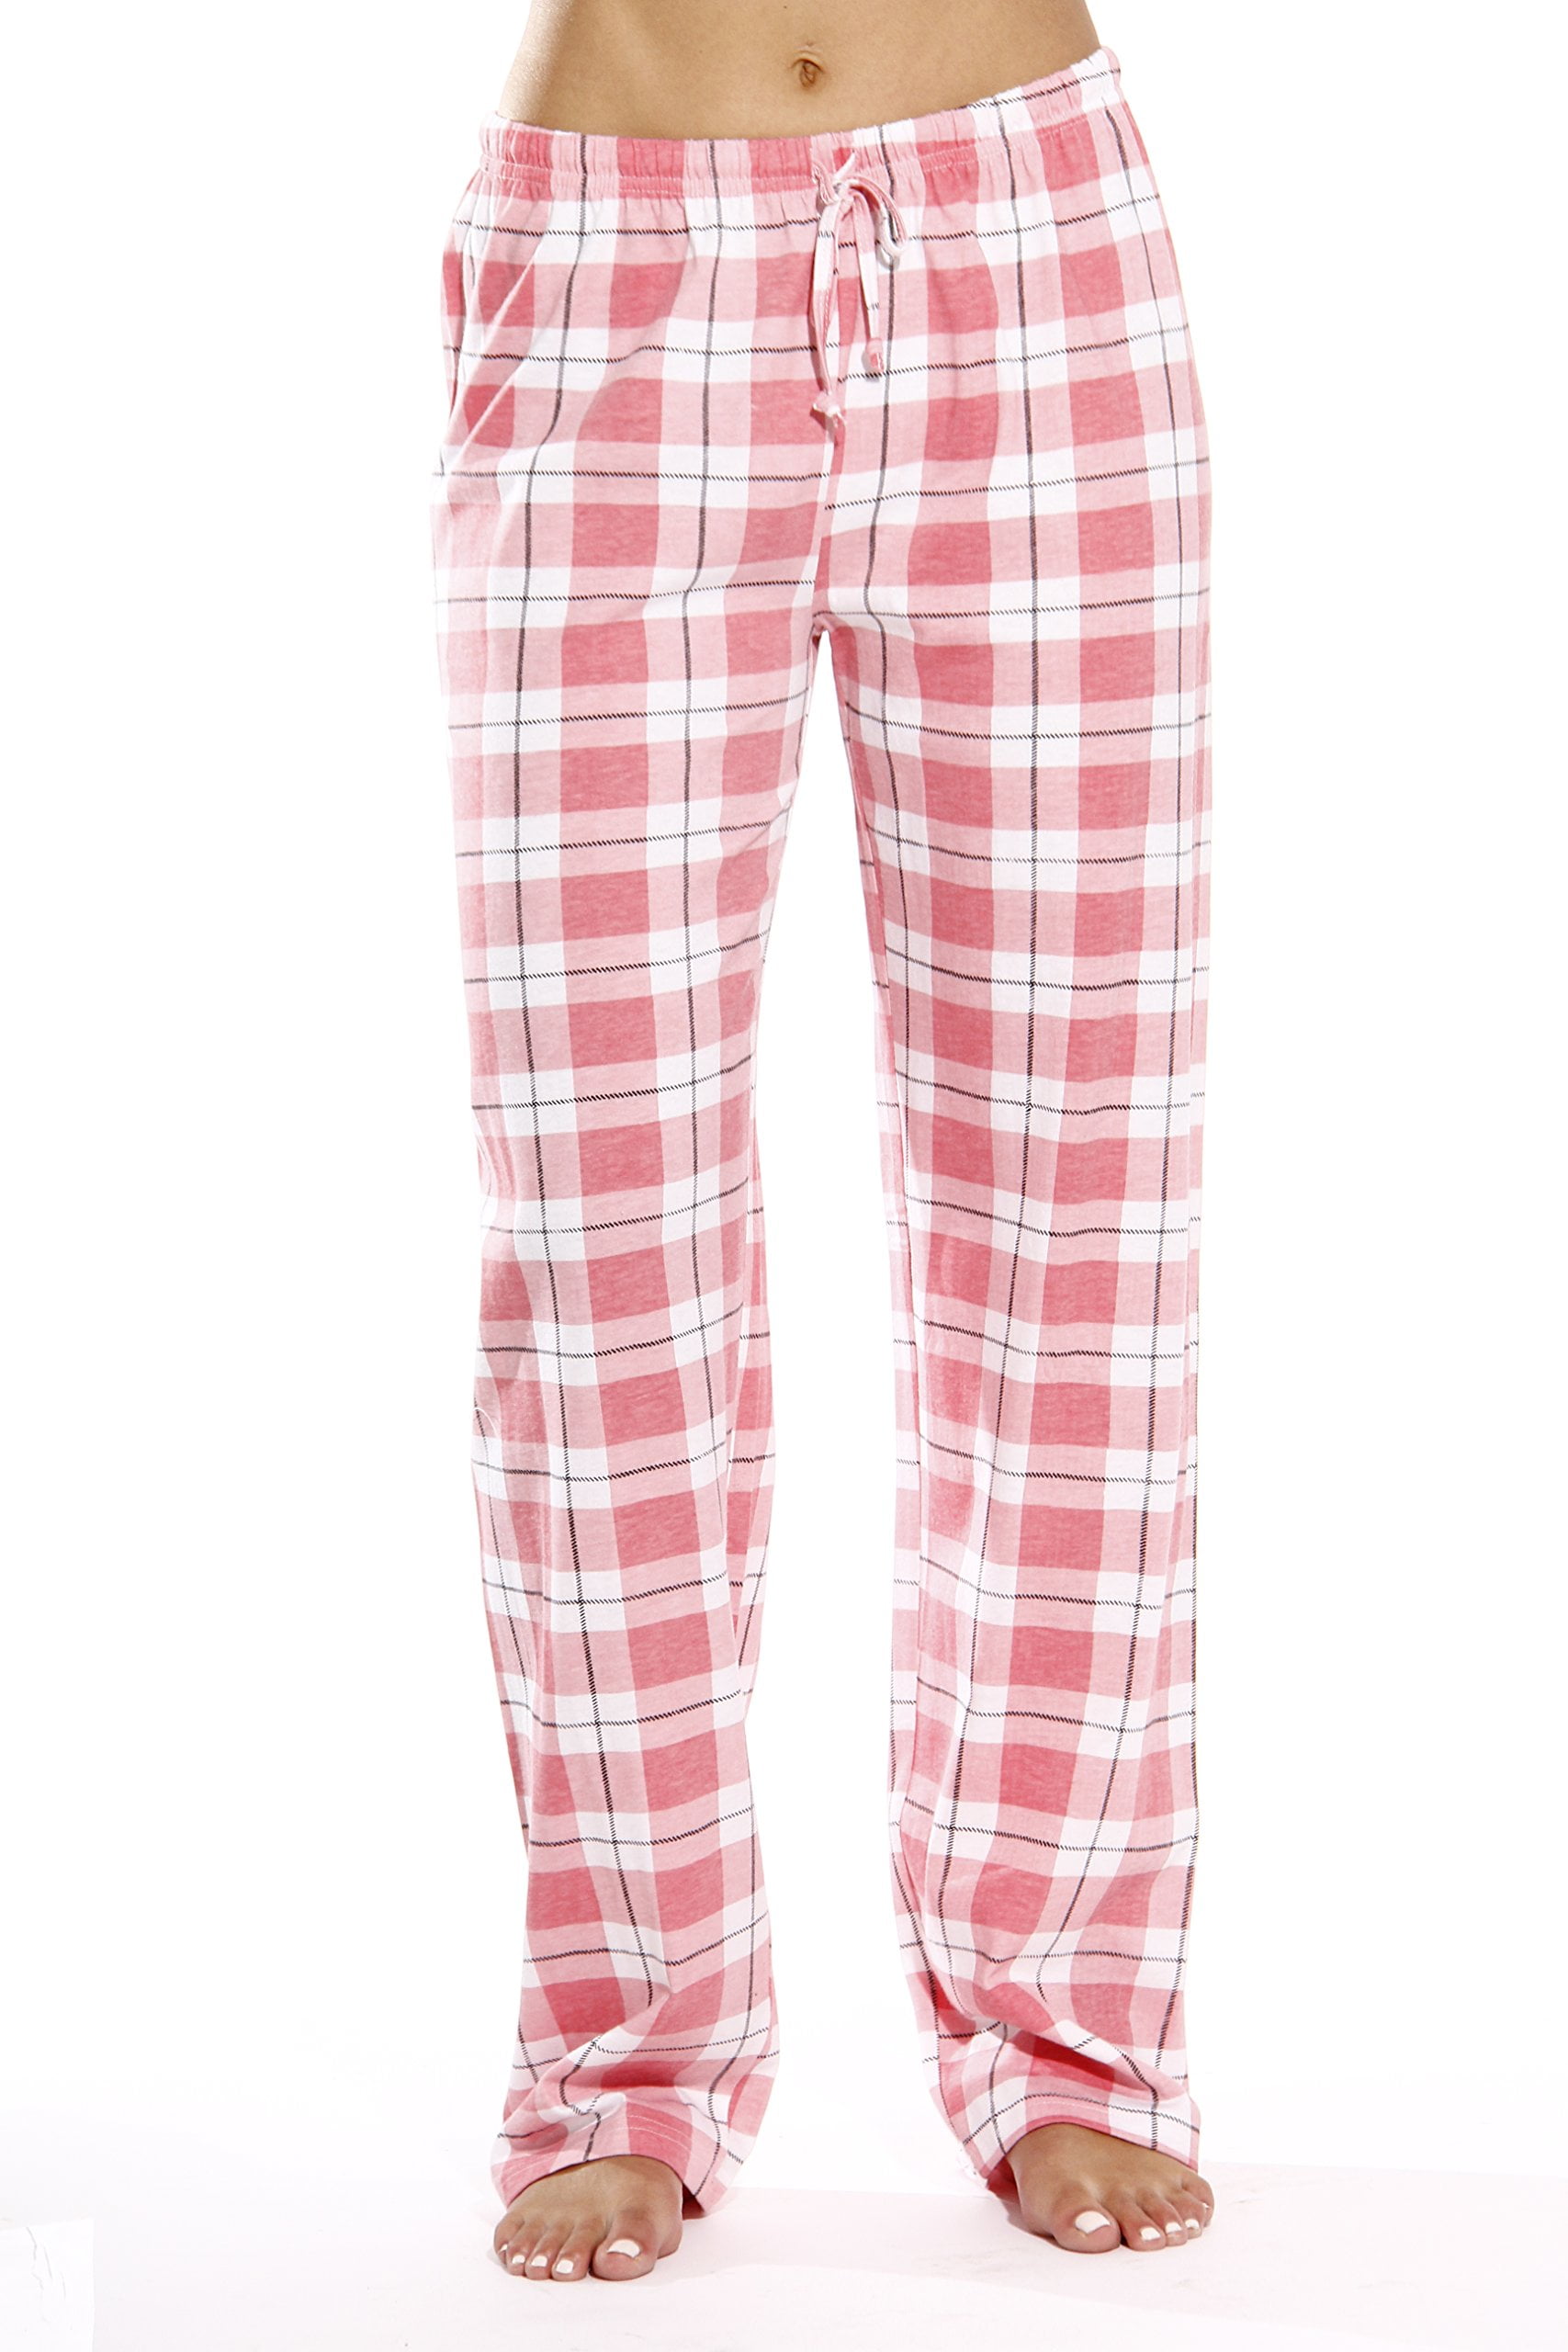 19 Best Pajamas for Women 2022  Comfortable Cozy Sleepwear